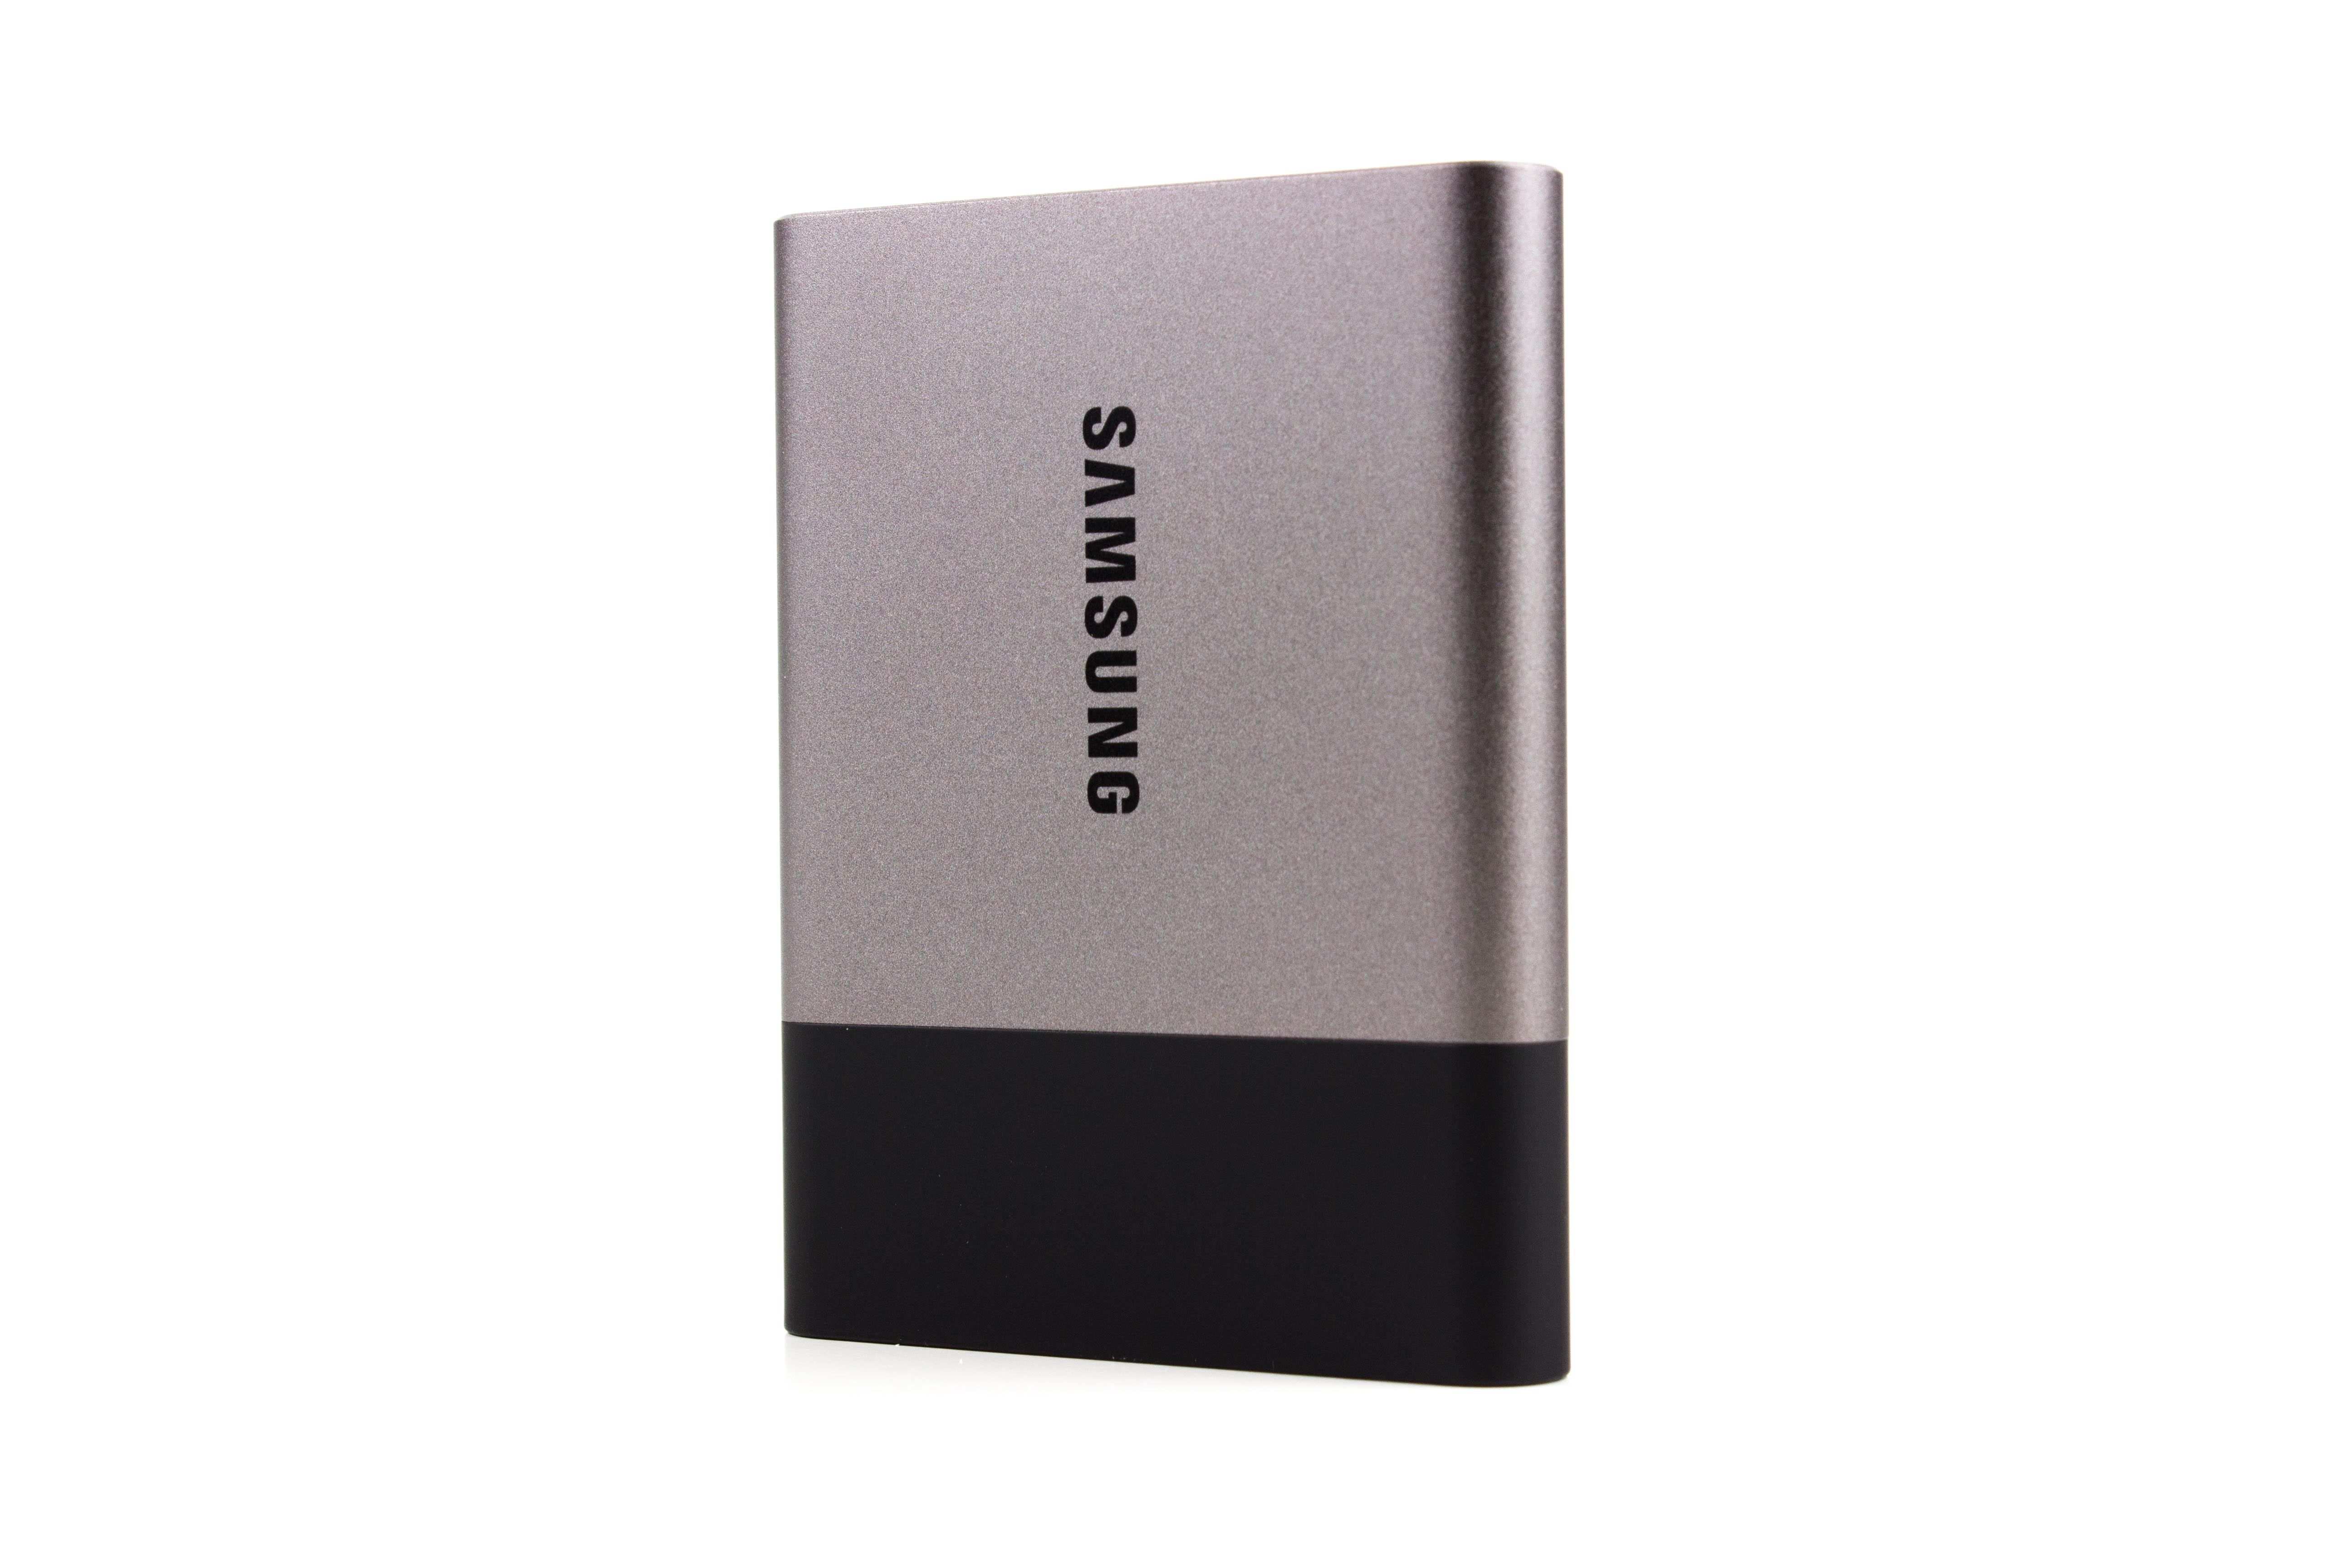 Samsung Portable SSD T3 - Lesertest Leo SSD aufgestellt